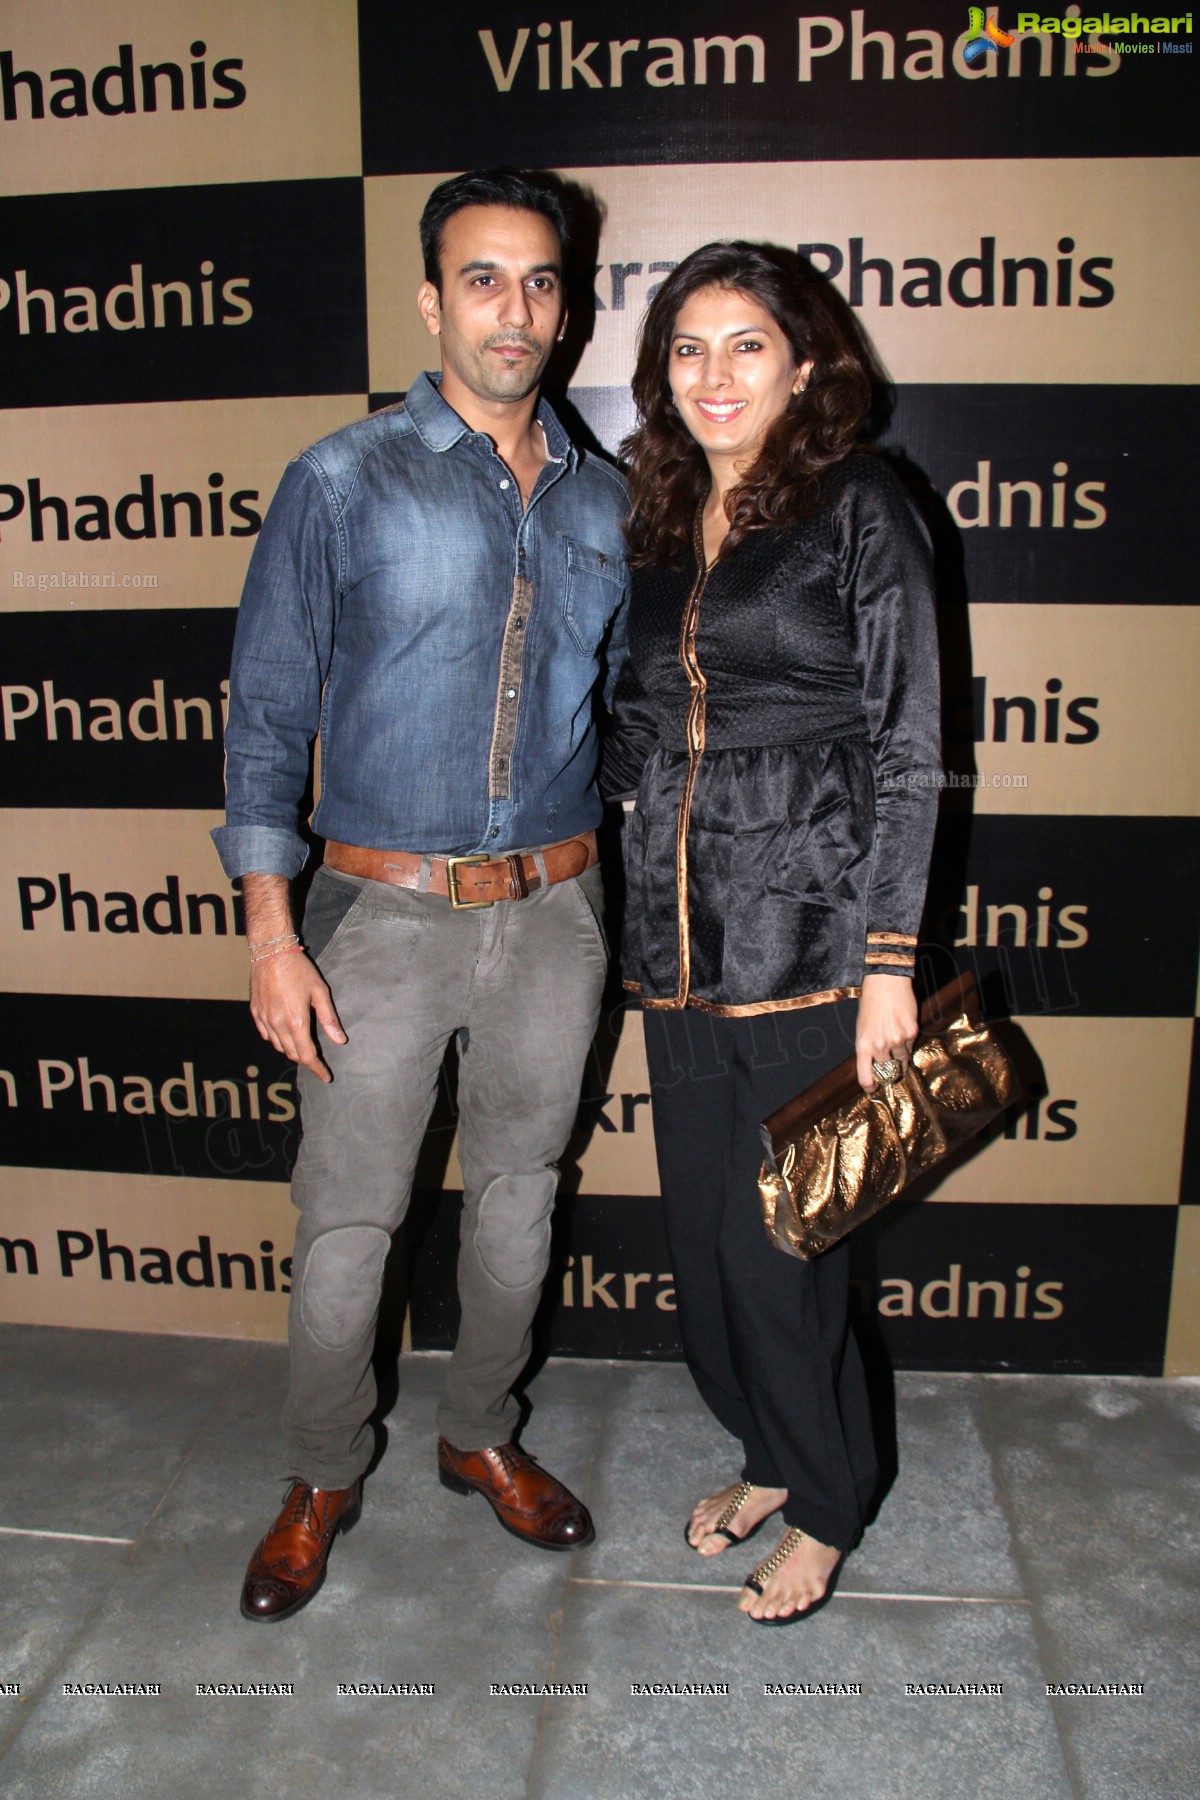 Celebrities & Socialites visits Vikram Phadnis Flagship Designer Studio in Hyderabad